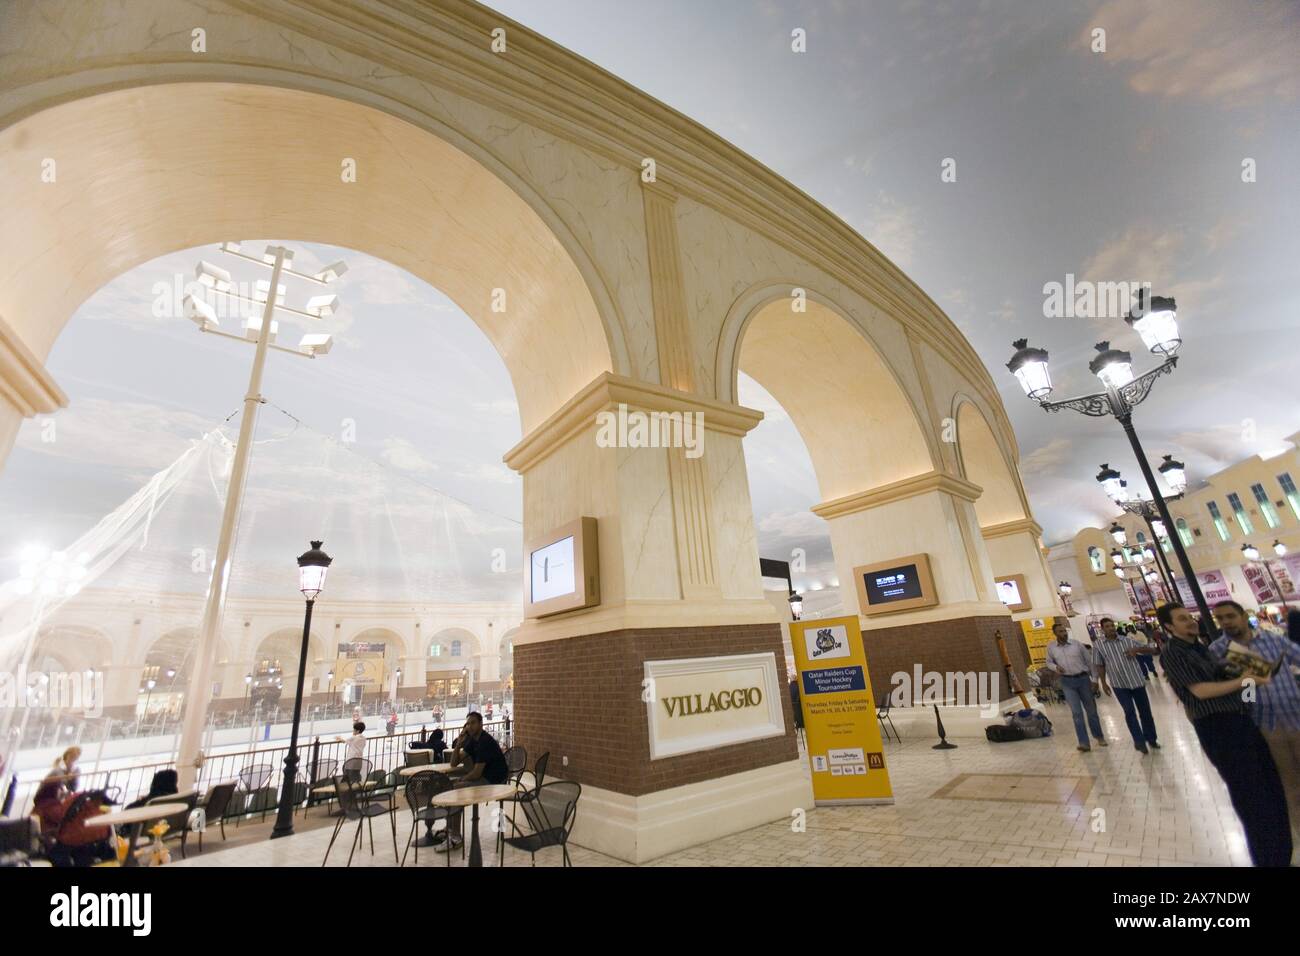 The Villagio Mall, Doha, Qatar. Stock Photo